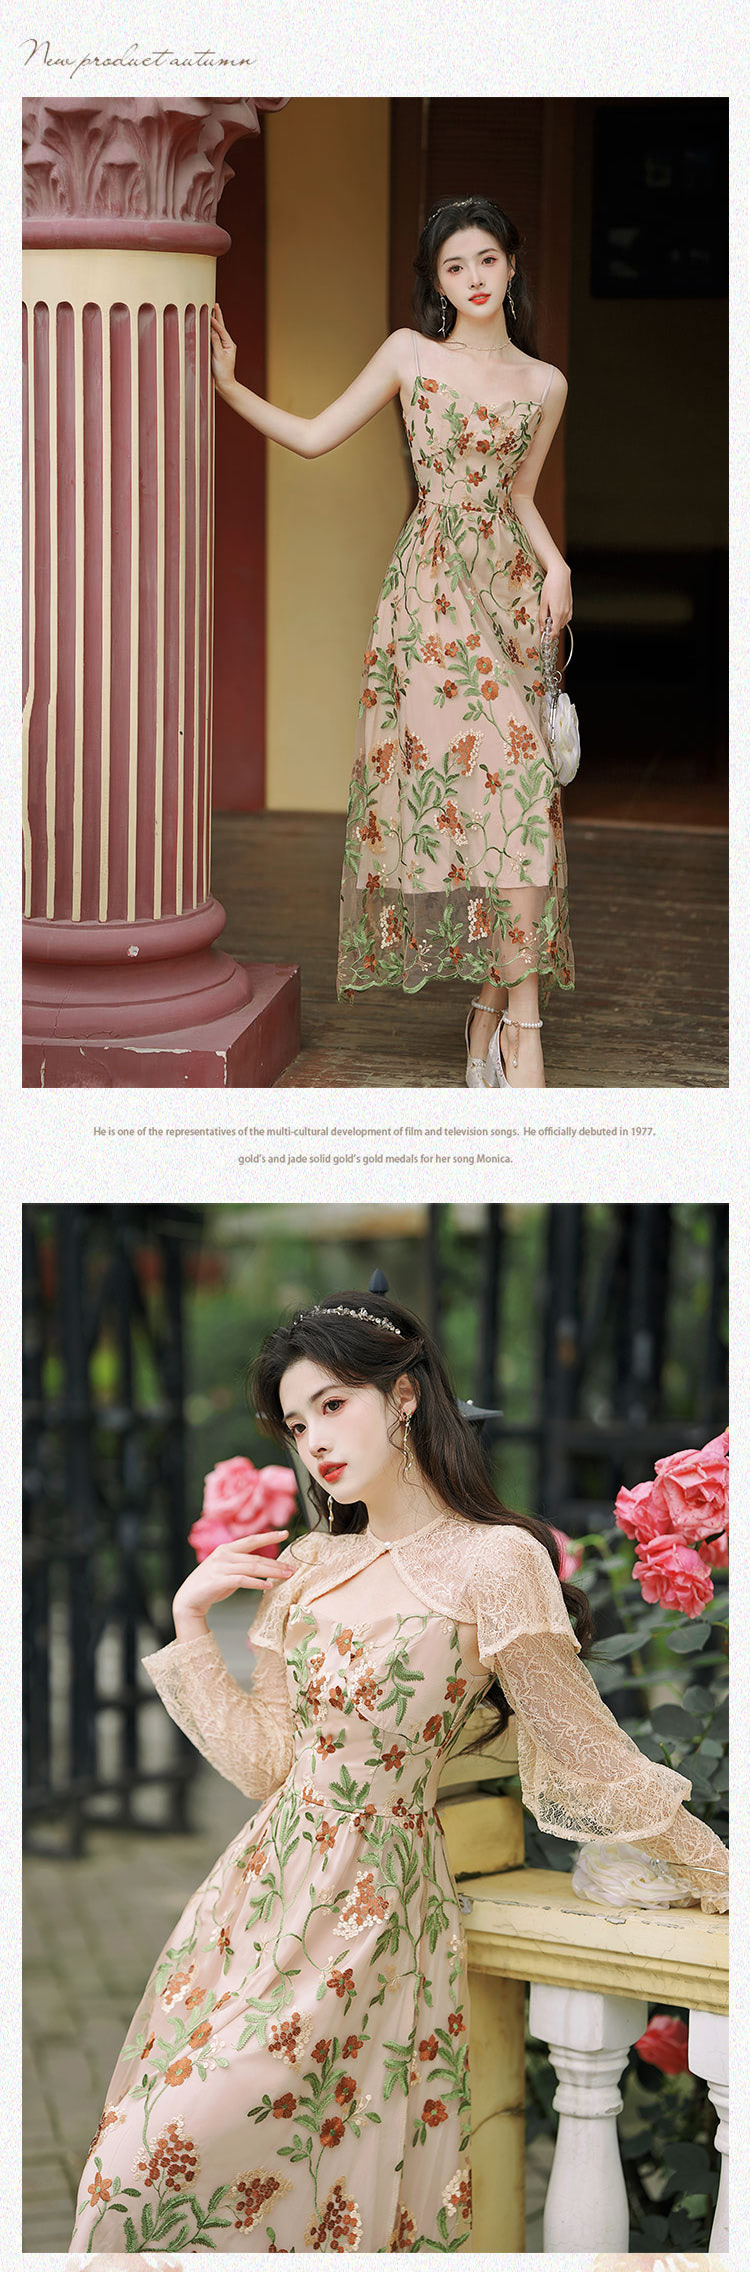 Romantic-Vintage-Floral-Embroidery-Lace-Short-Cardigan-Slip-Dress-Set11